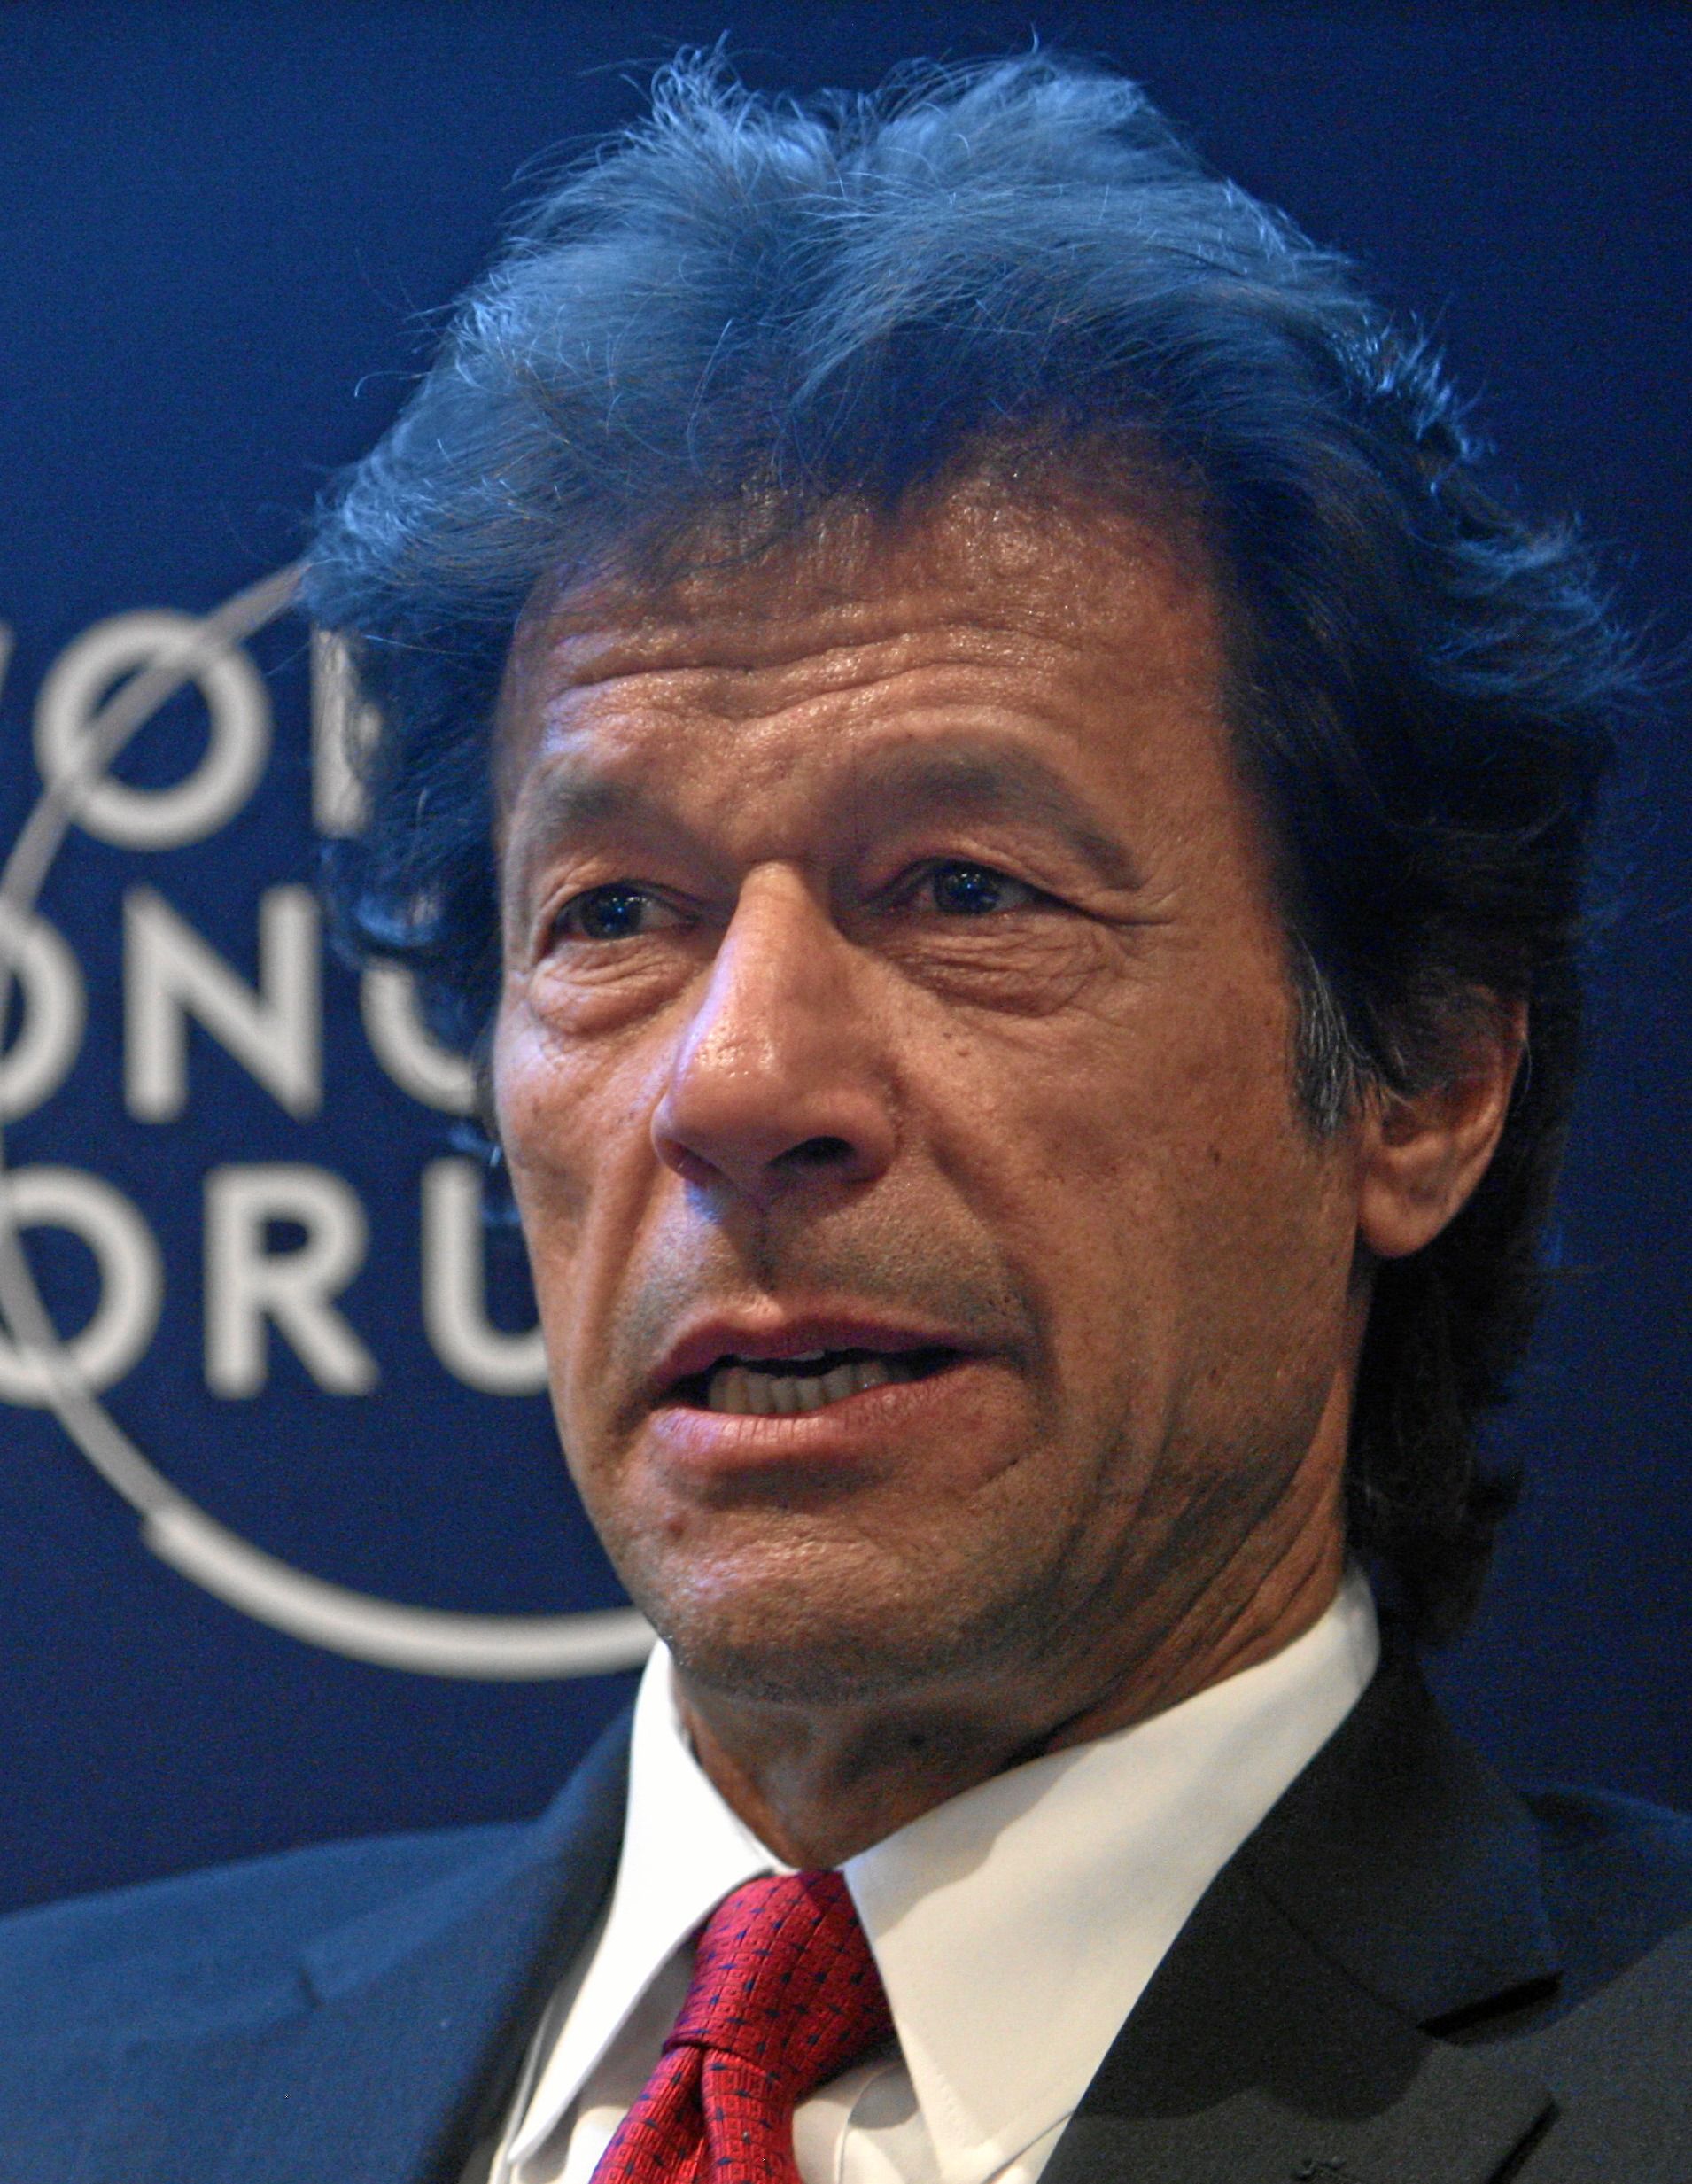                               Pakistan PM Imran Khan’s US visit starts off in a Humiliating way                             
                              